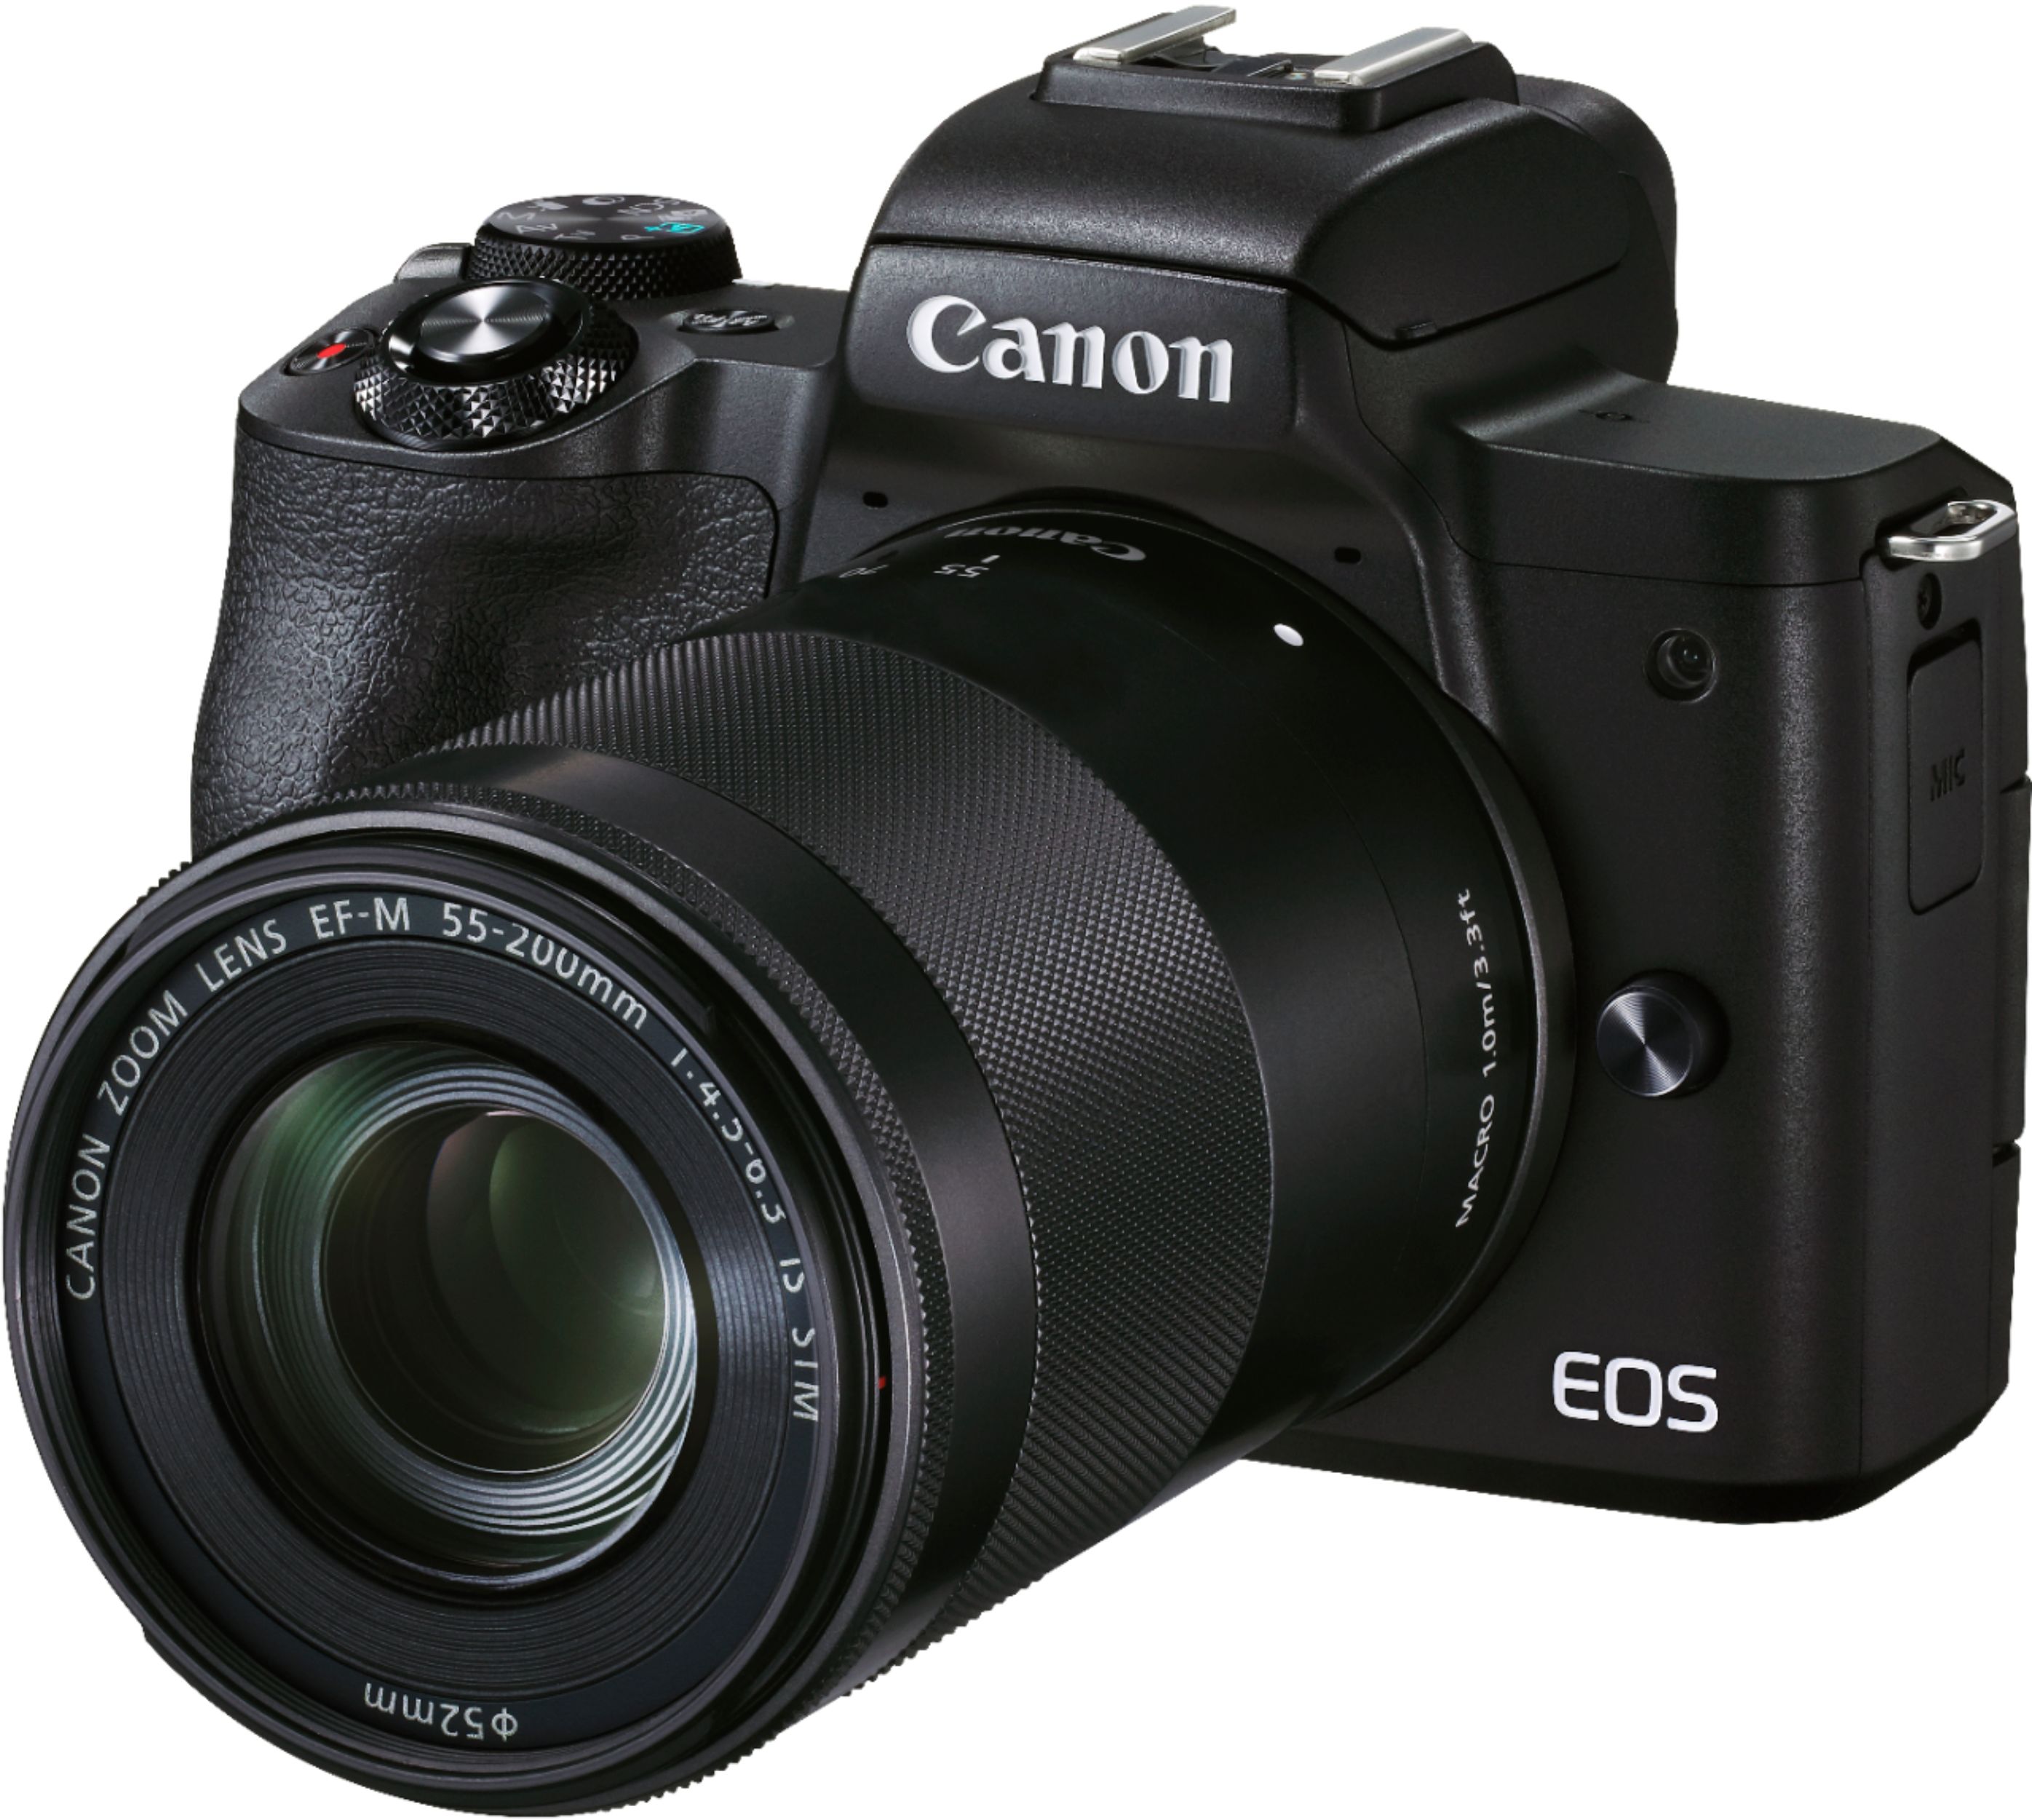 Canon Eos M50 Mark Ii Mirrorless Camera 2 Lens Kit With Ef M 15 45mm F 3 5 6 3 Is Stm Ef M 55 0mm F 4 5 6 3 Is Stm Lenses 4728c014 Best Buy